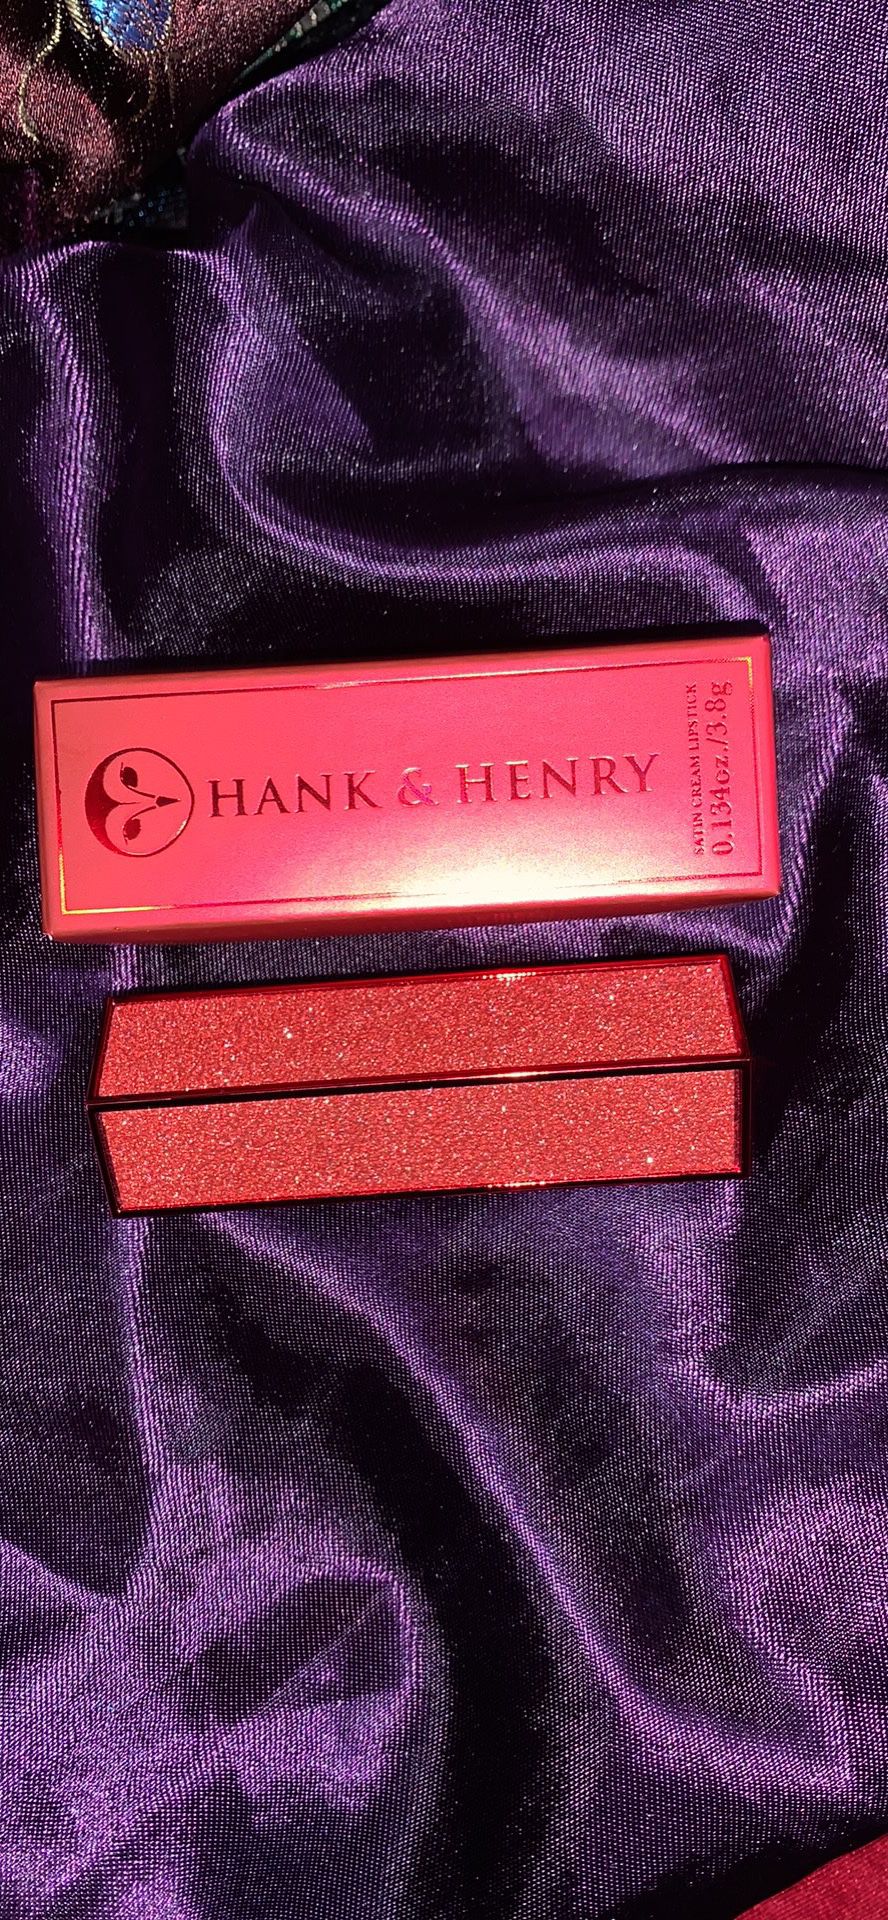 Hank & Henry Satin Cream Lipstick